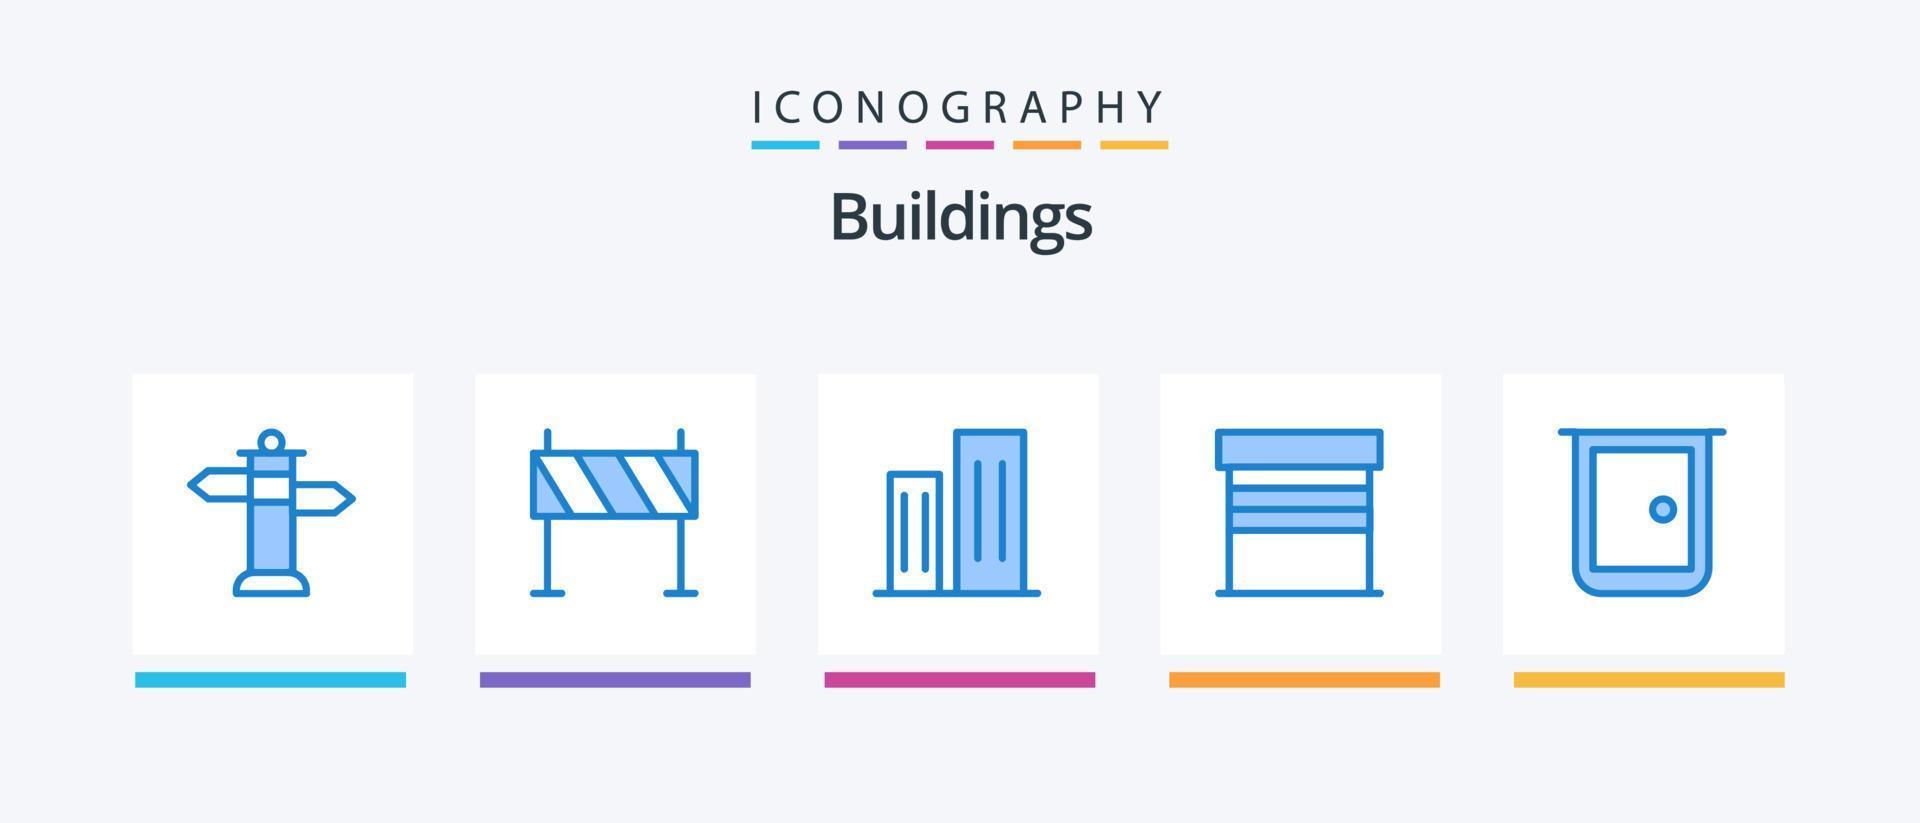 paquete de iconos de edificios azul 5 que incluye edificios. garaje. arquitectura. edificios rascacielos diseño de iconos creativos vector